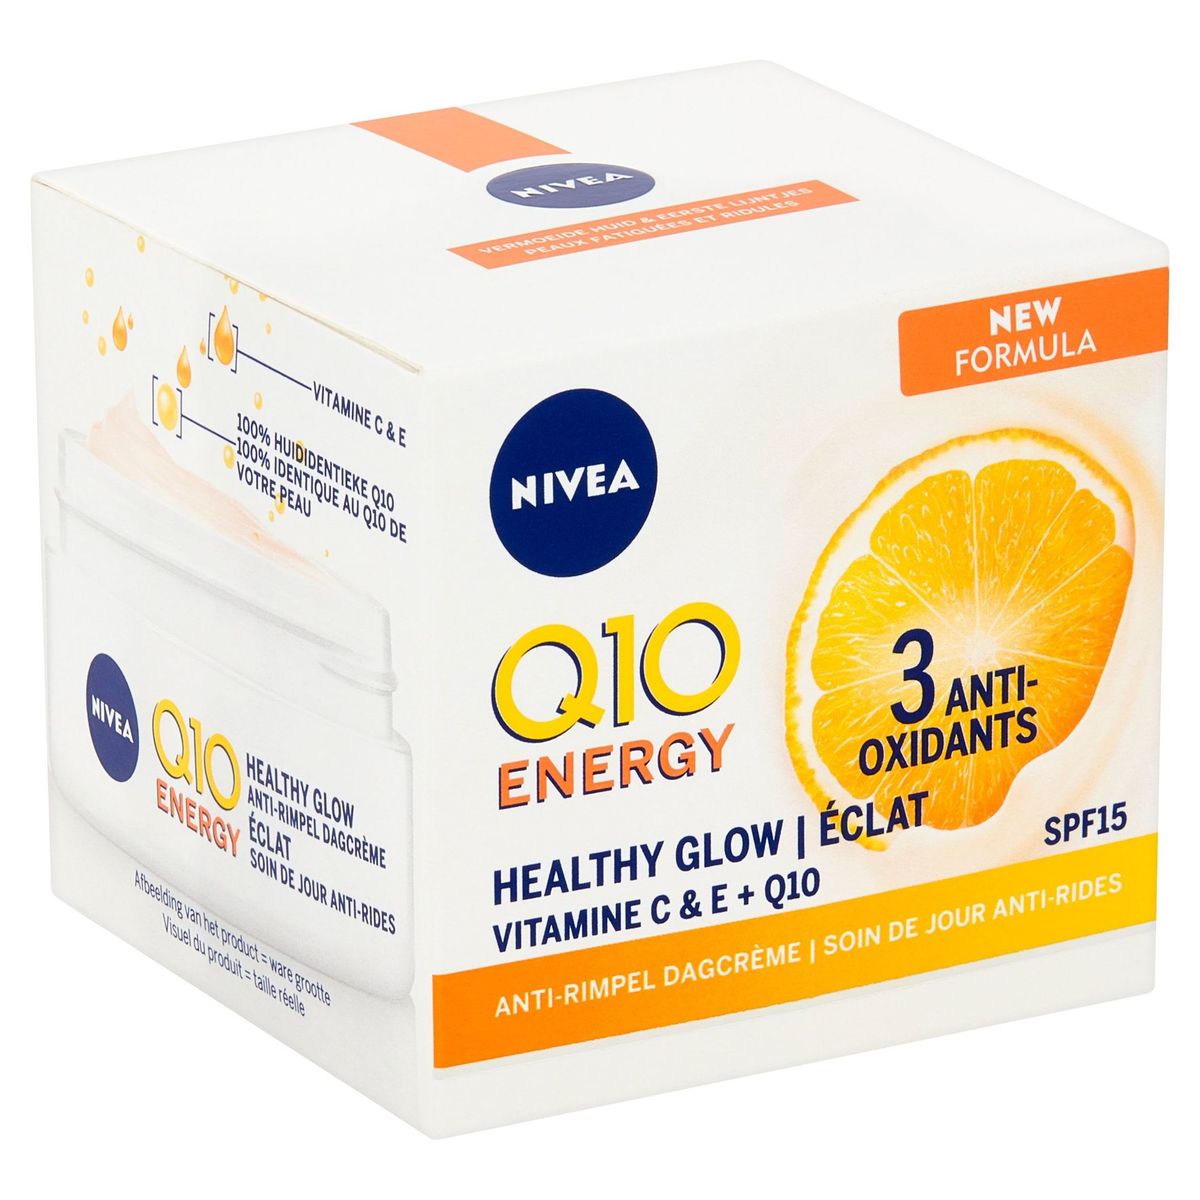 Nivea Q10 Energy Éclat SPF15 Anti-Rimpel Dagcrème 50 ml